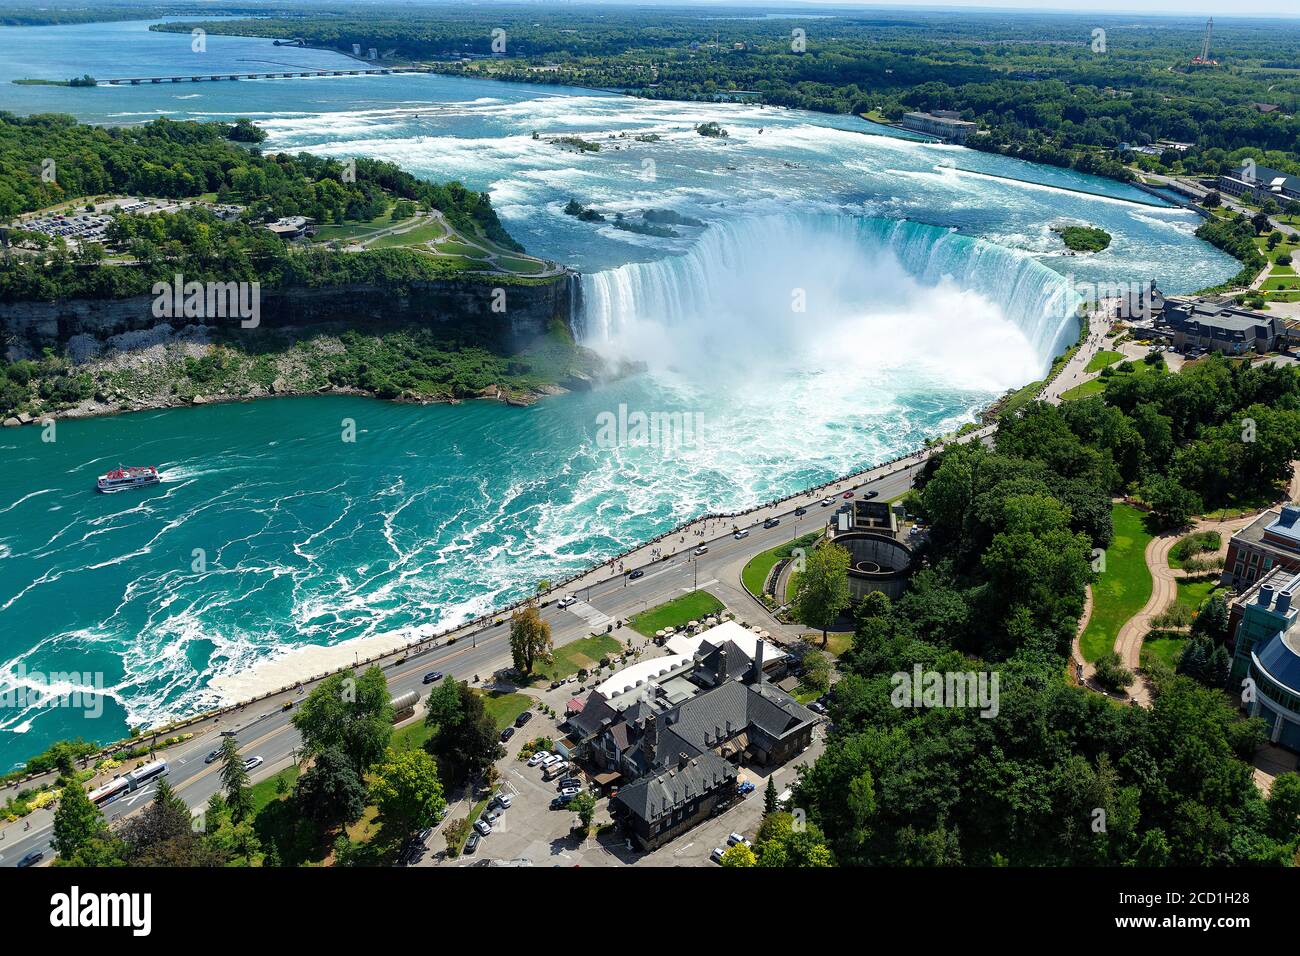 Veduta Aerea Delle Cascate Horseshoe, Niagara Falls Ontario Canada. Foto Stock